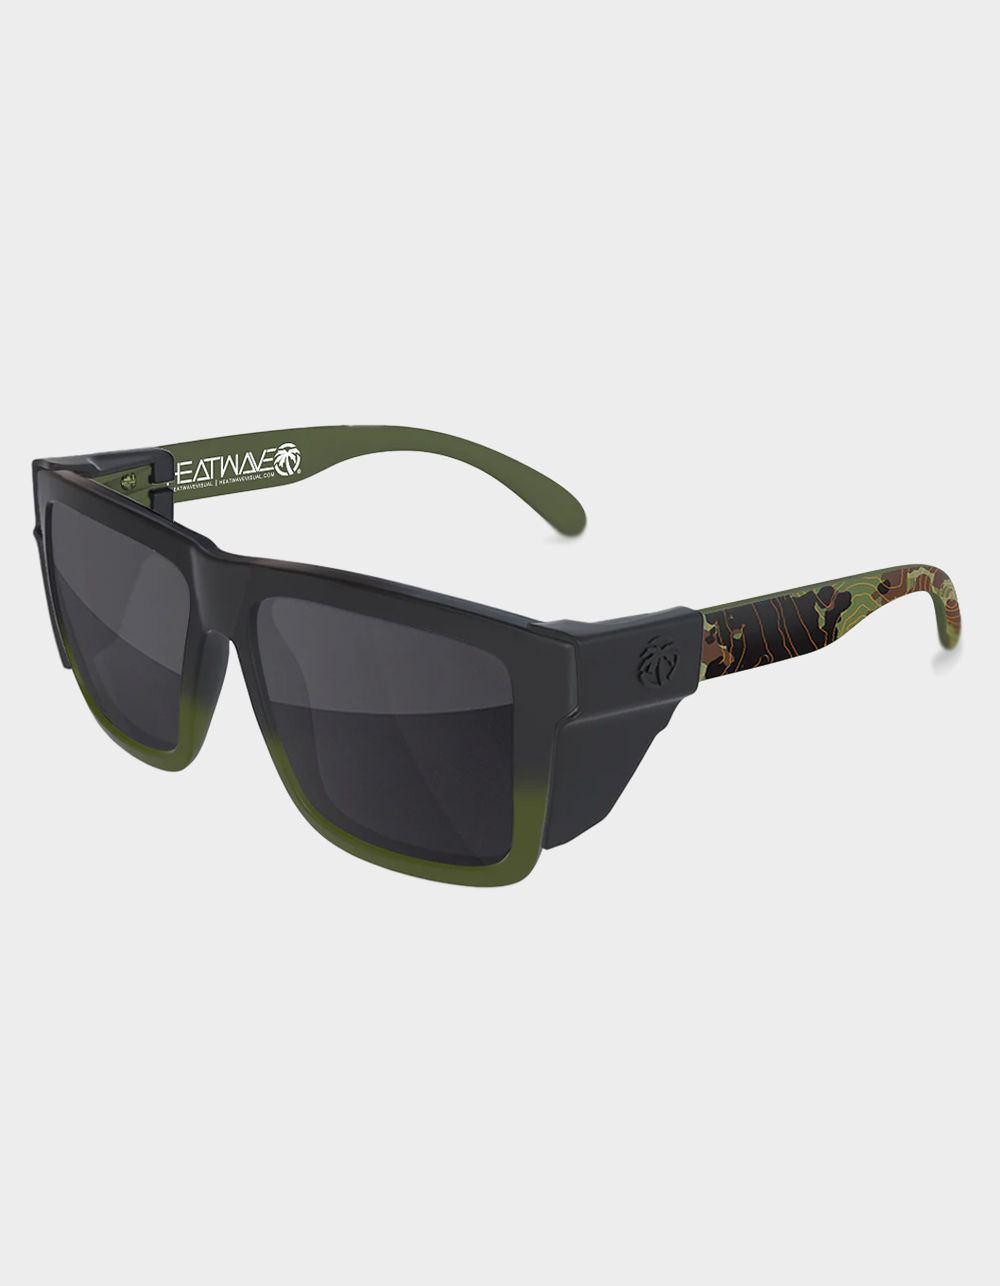 HEATWAVE XL Vise Z87 Camo Sunglasses - CAMO